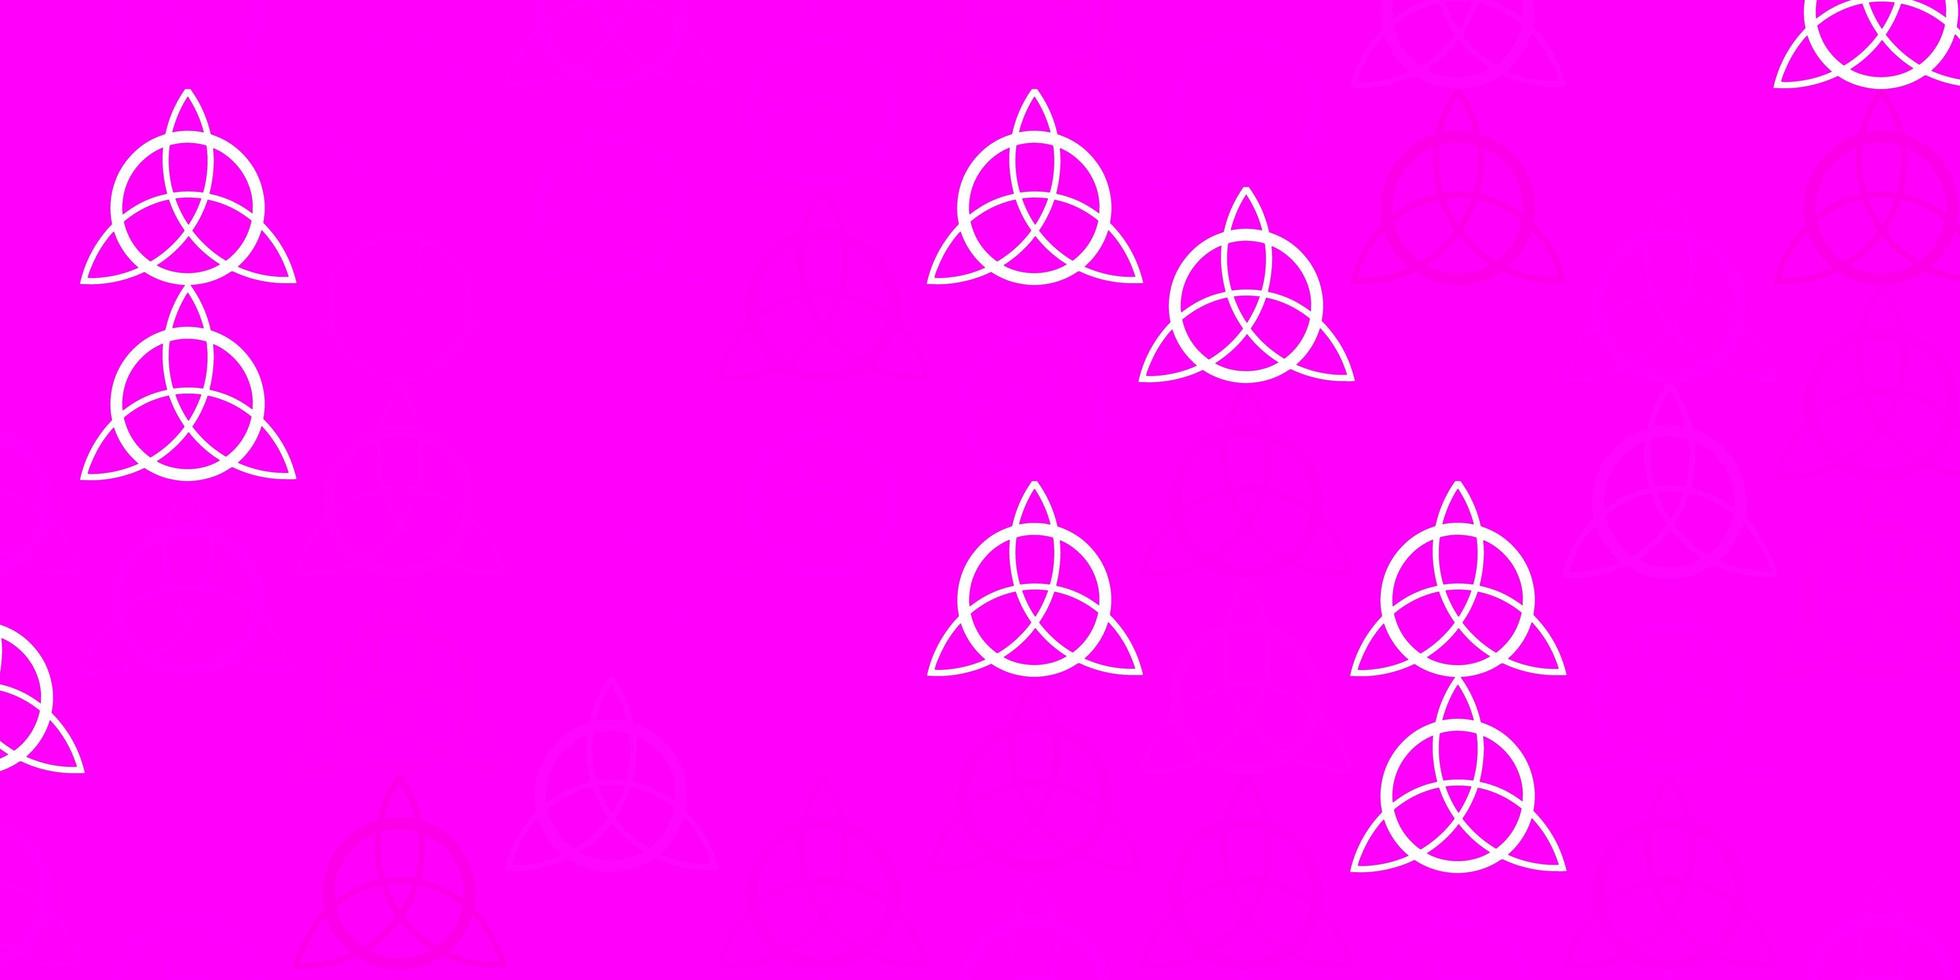 plantilla de vector rosa claro con signos esotéricos.